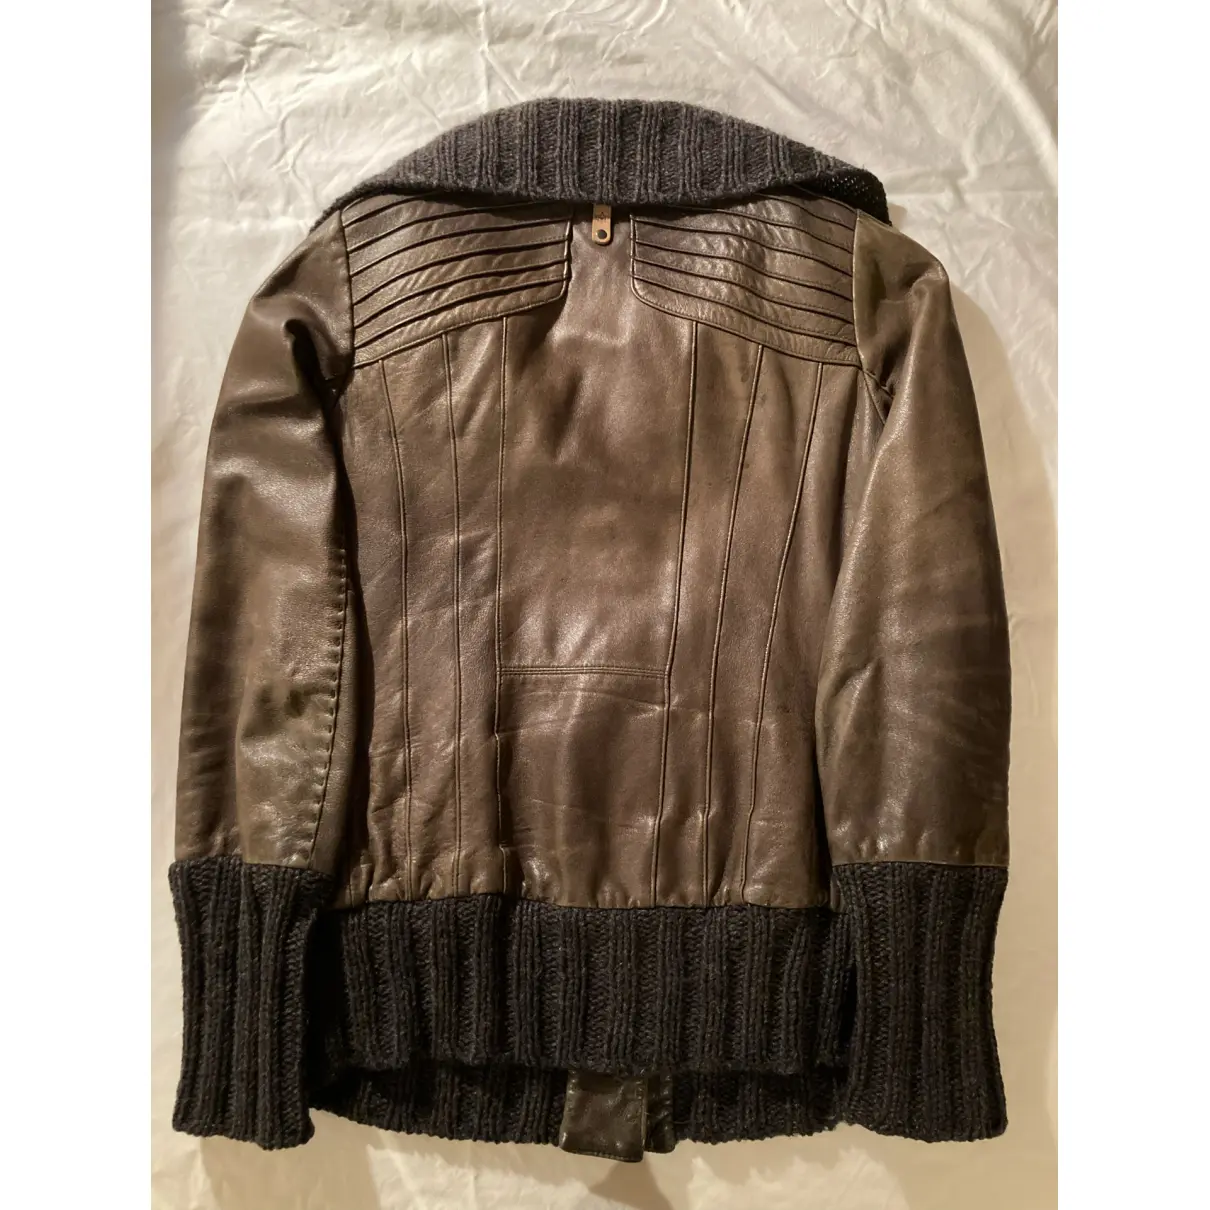 Buy Mackage Leather jacket online